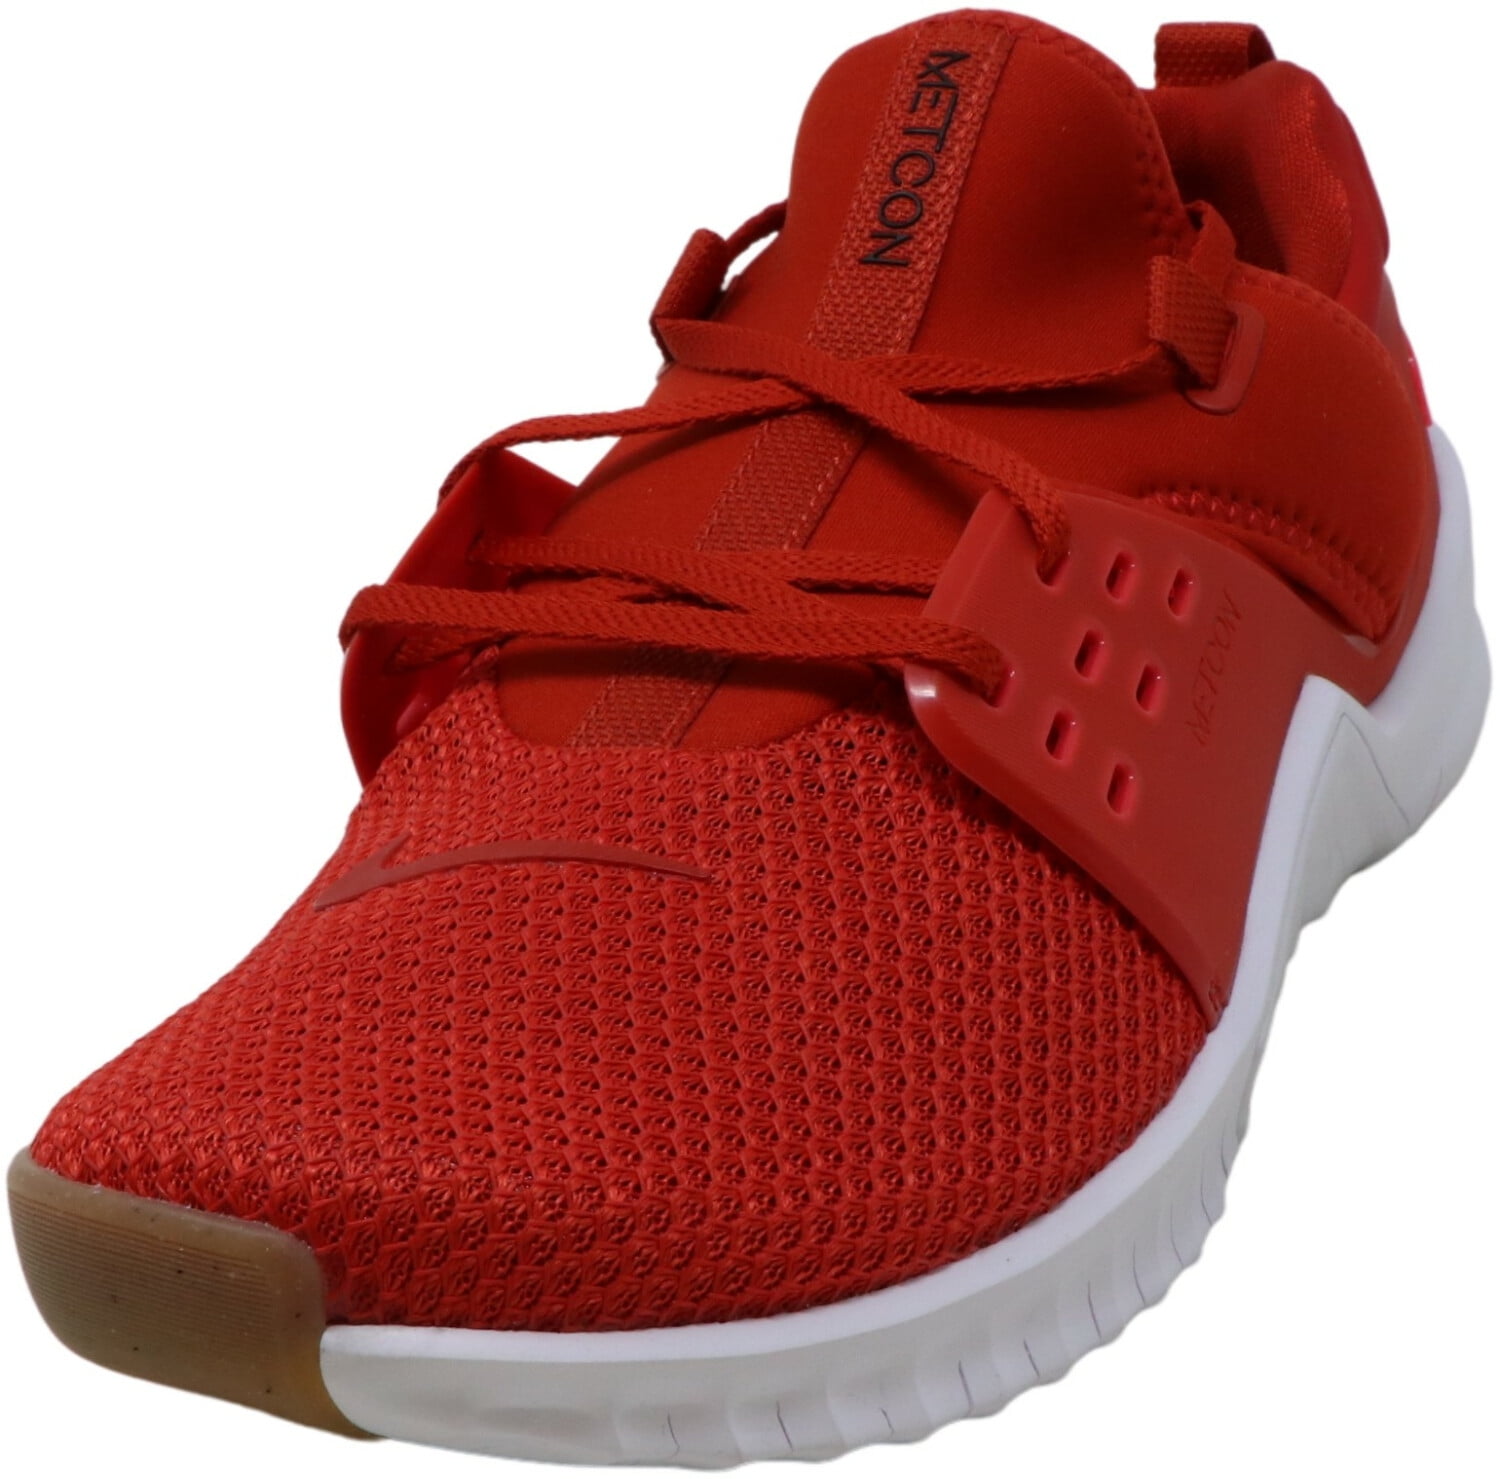 Men's Free X Metcon 2 Mystic Red / Orbit Gum Light Brown Low Fabric Training Shoes - 11.5M - Walmart.com